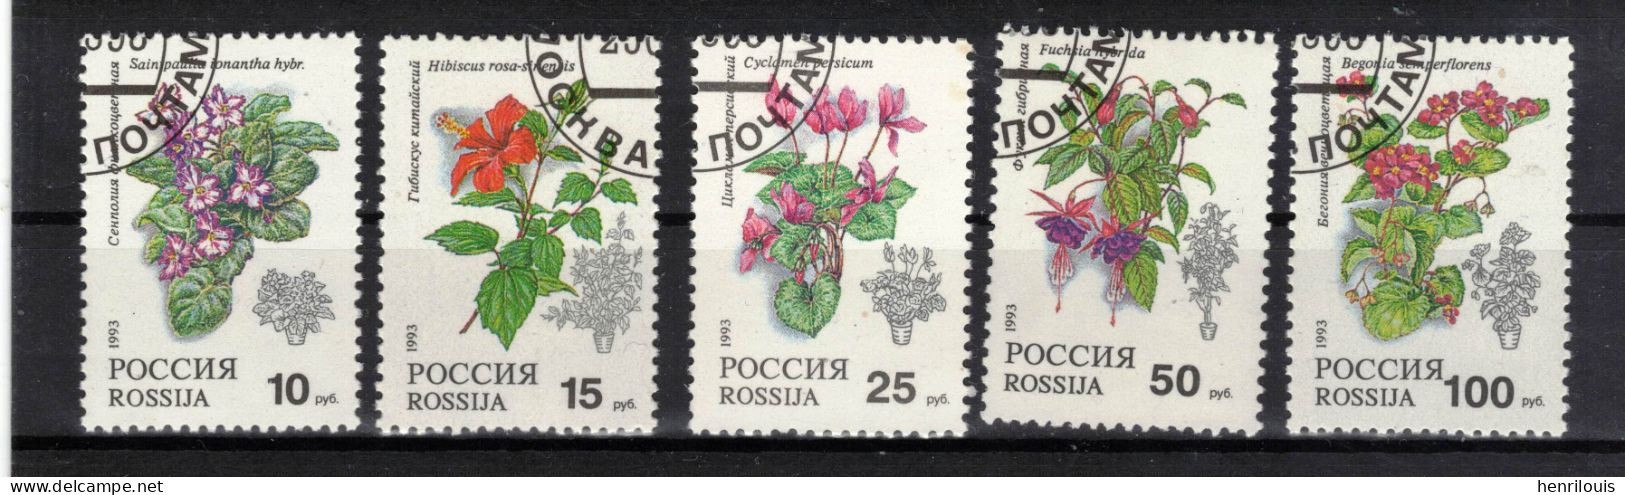 Russie   Timbres  De 1993  ( Ref 1332 H)  Flore - Fleurs - Gebruikt